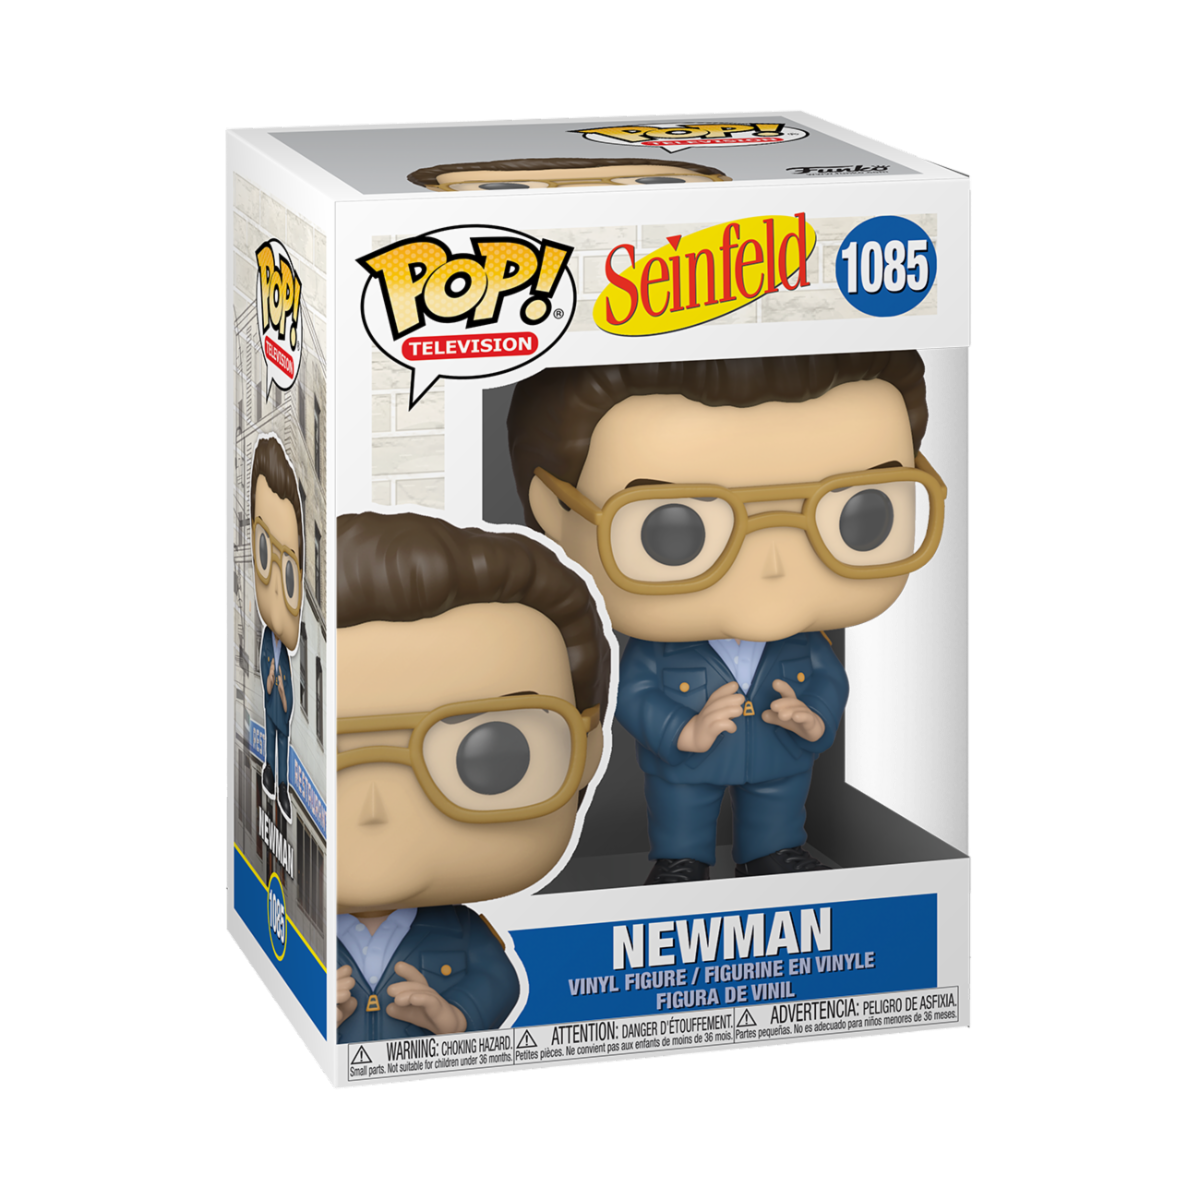 Newman #1085 Funko Pop! Seinfeld